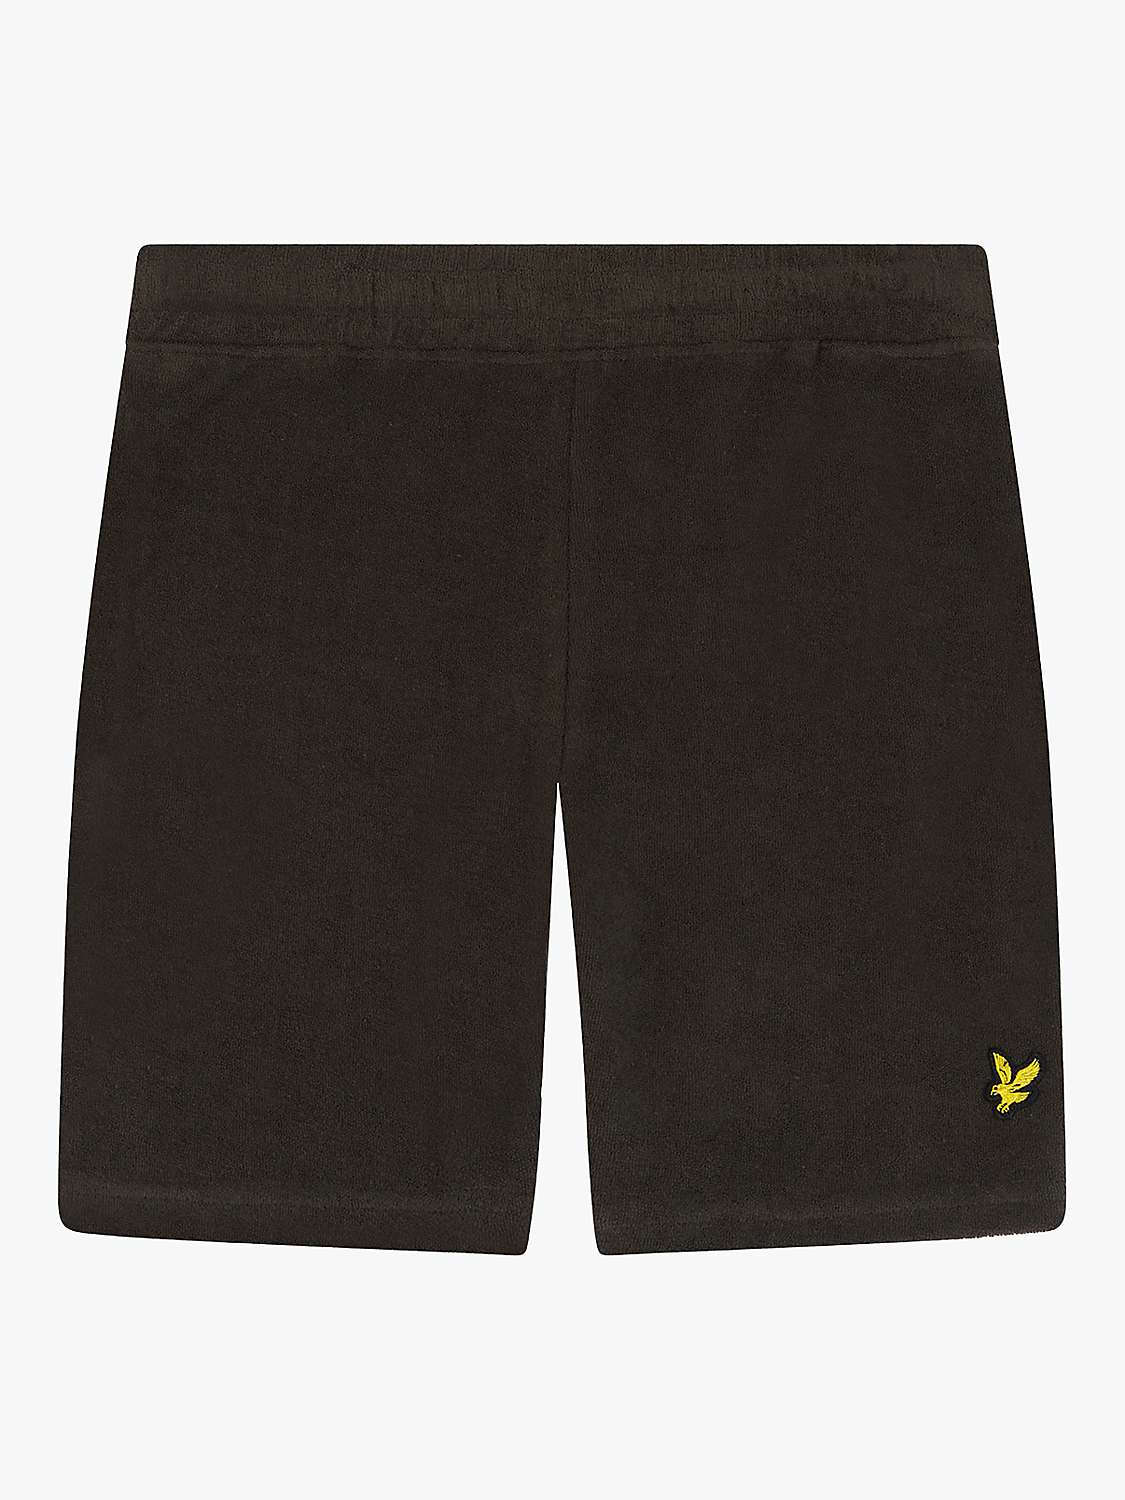 Buy Lyle & Scott Kids' Towelling Shorts, Olive Online at johnlewis.com